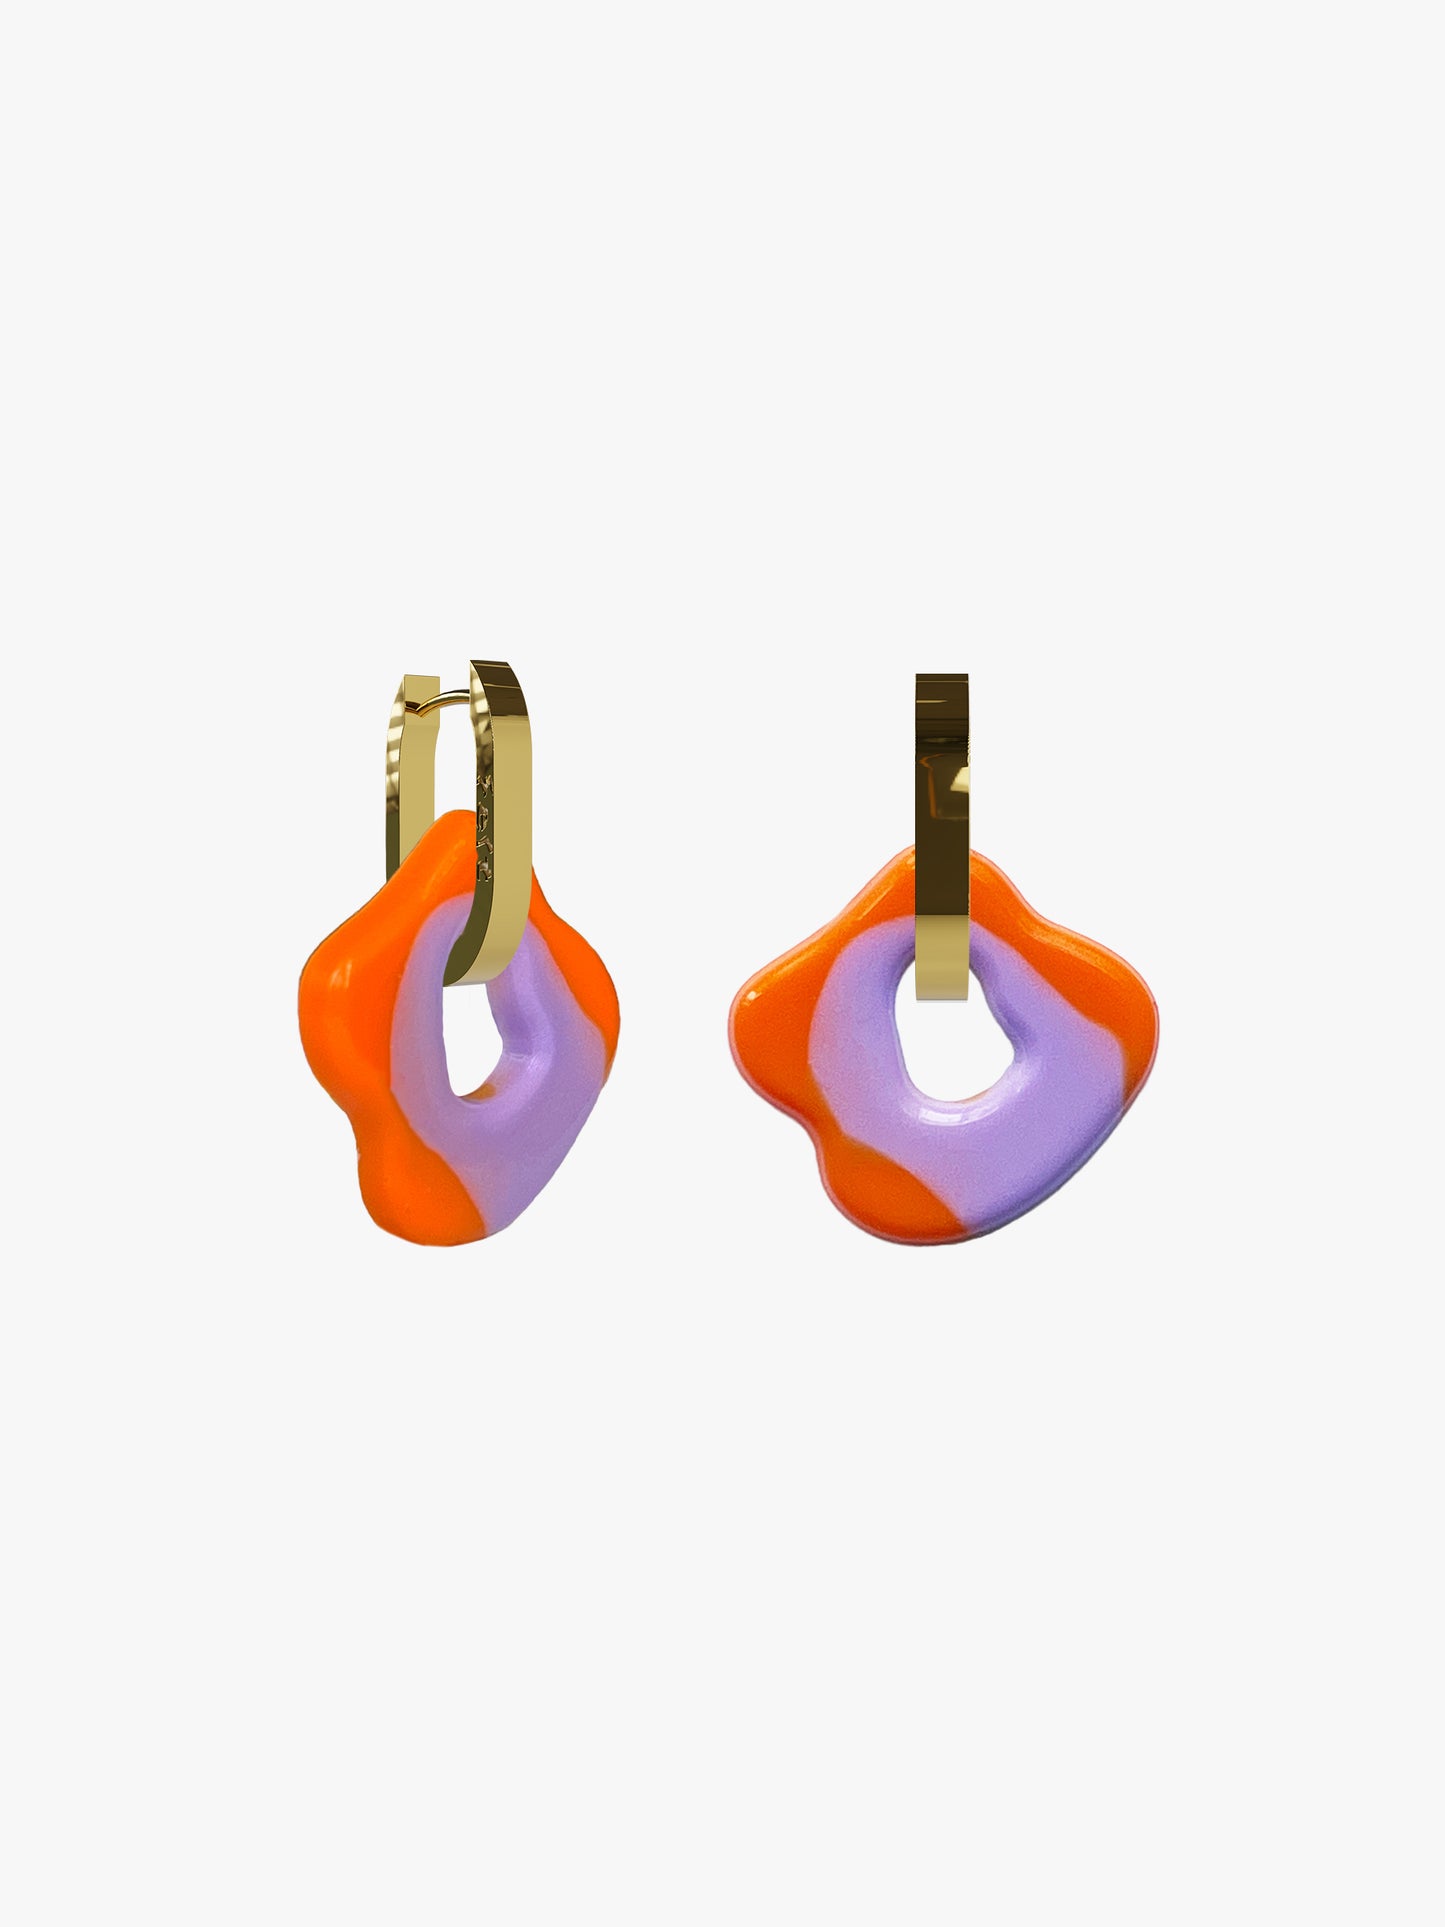 Sol orange lilac gold earring (pair)